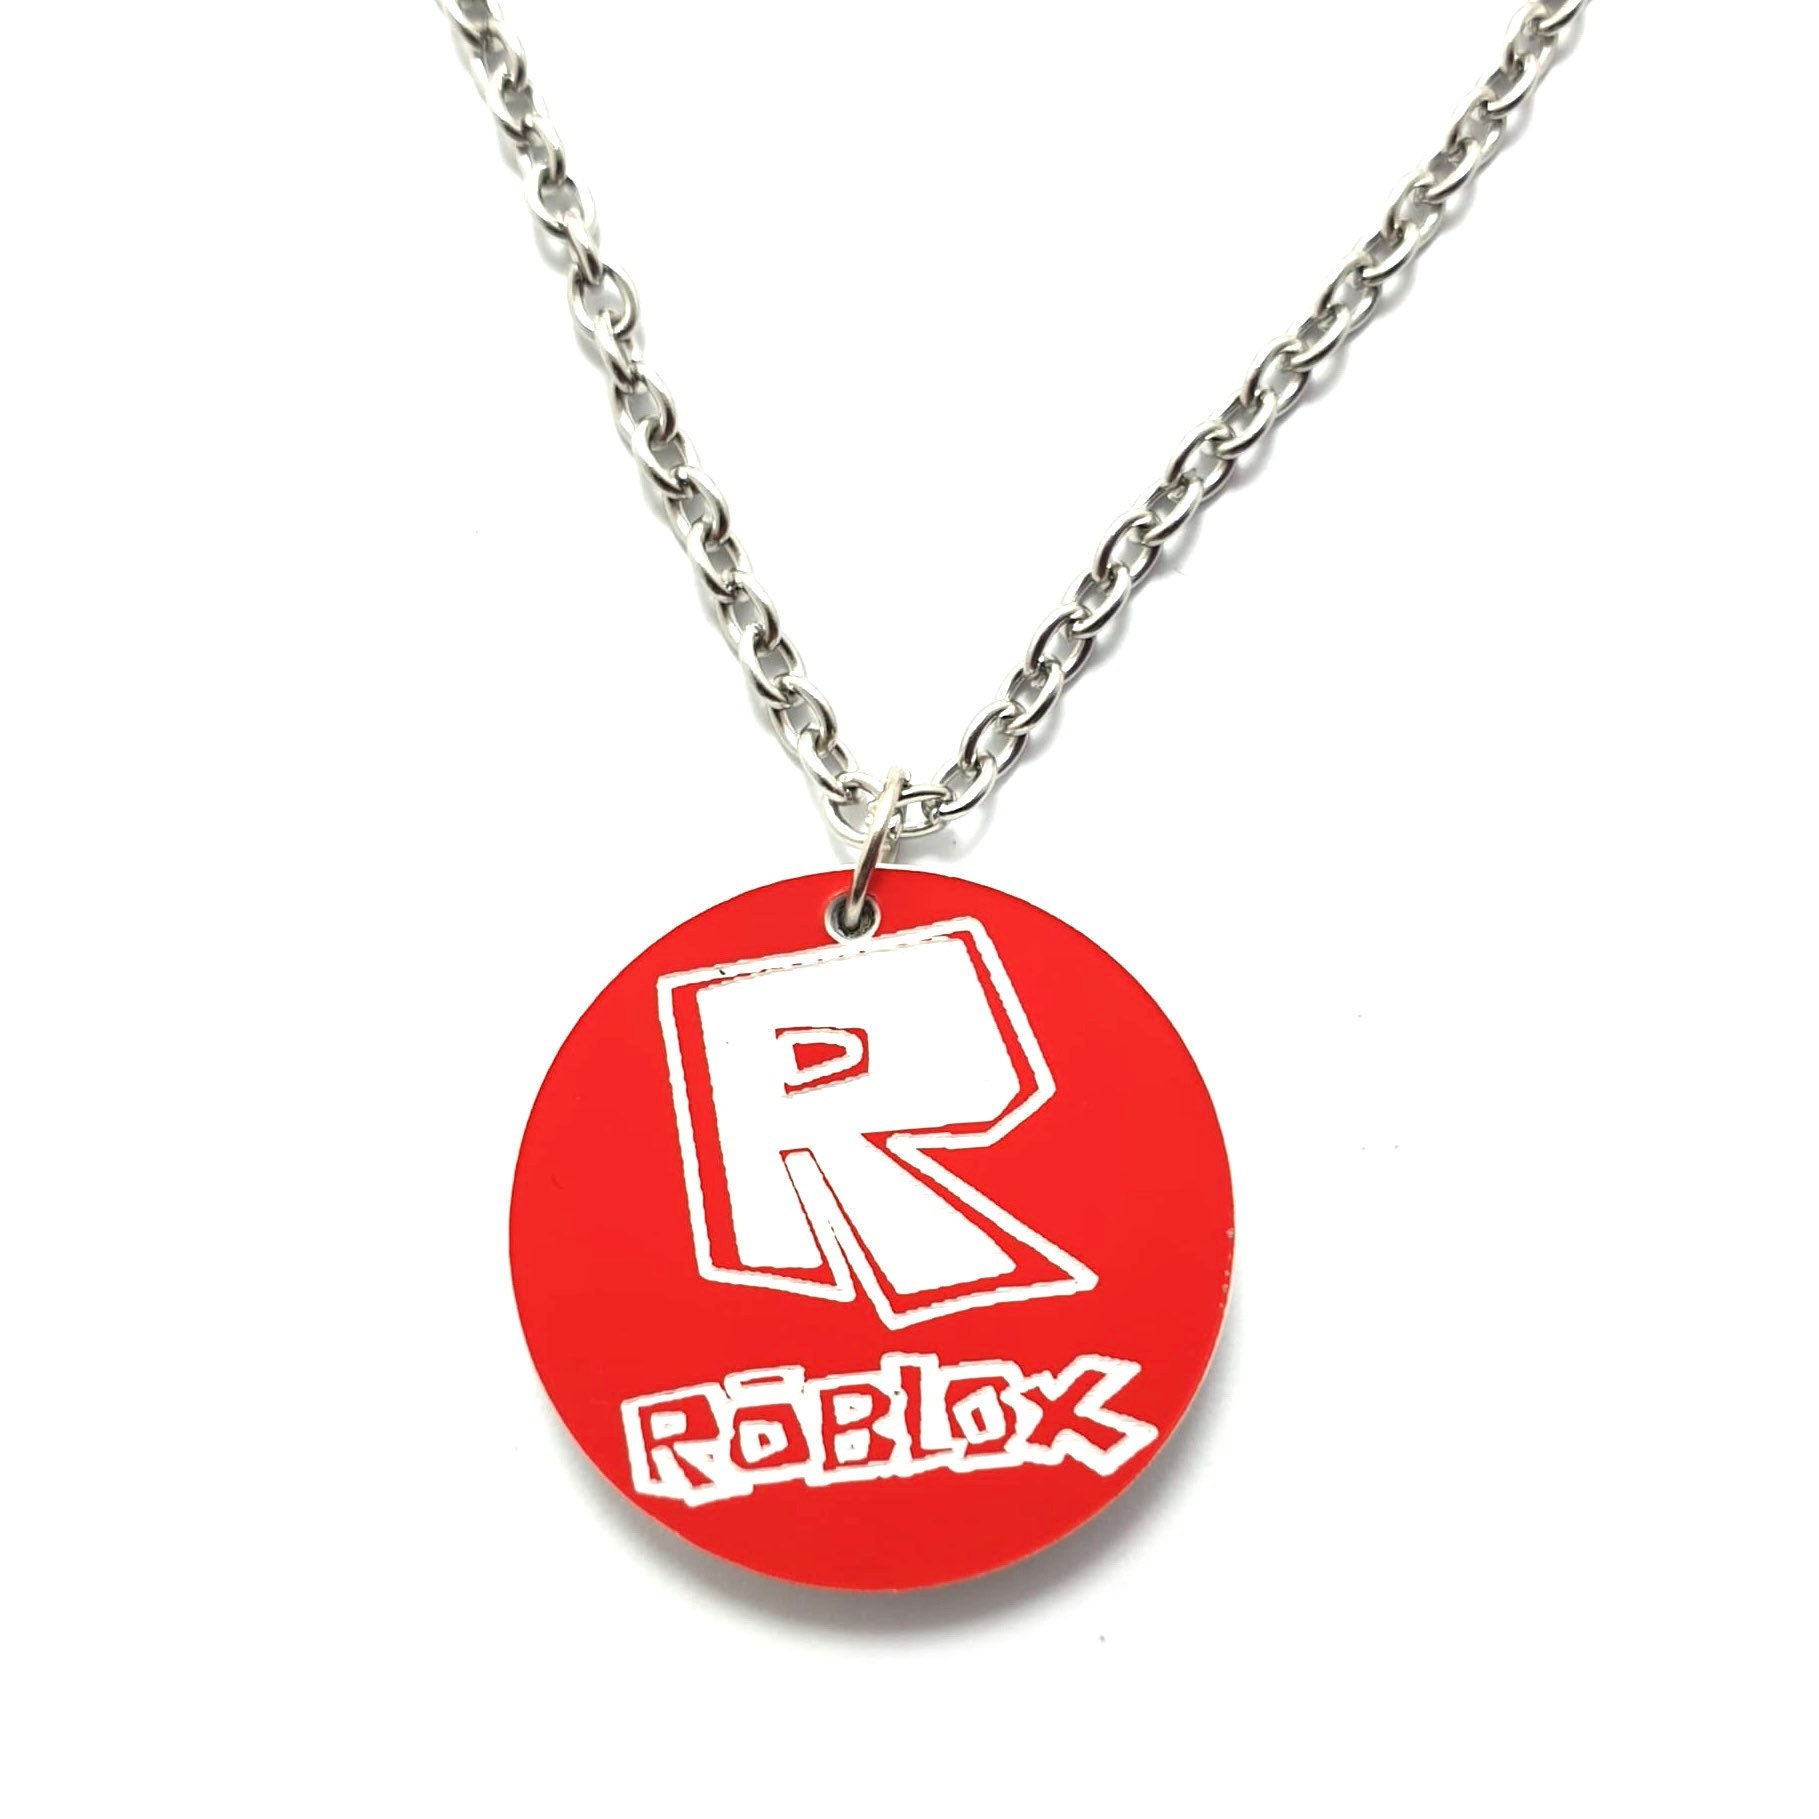 File:Roblox Chinese Logo.svg - Wikimedia Commons